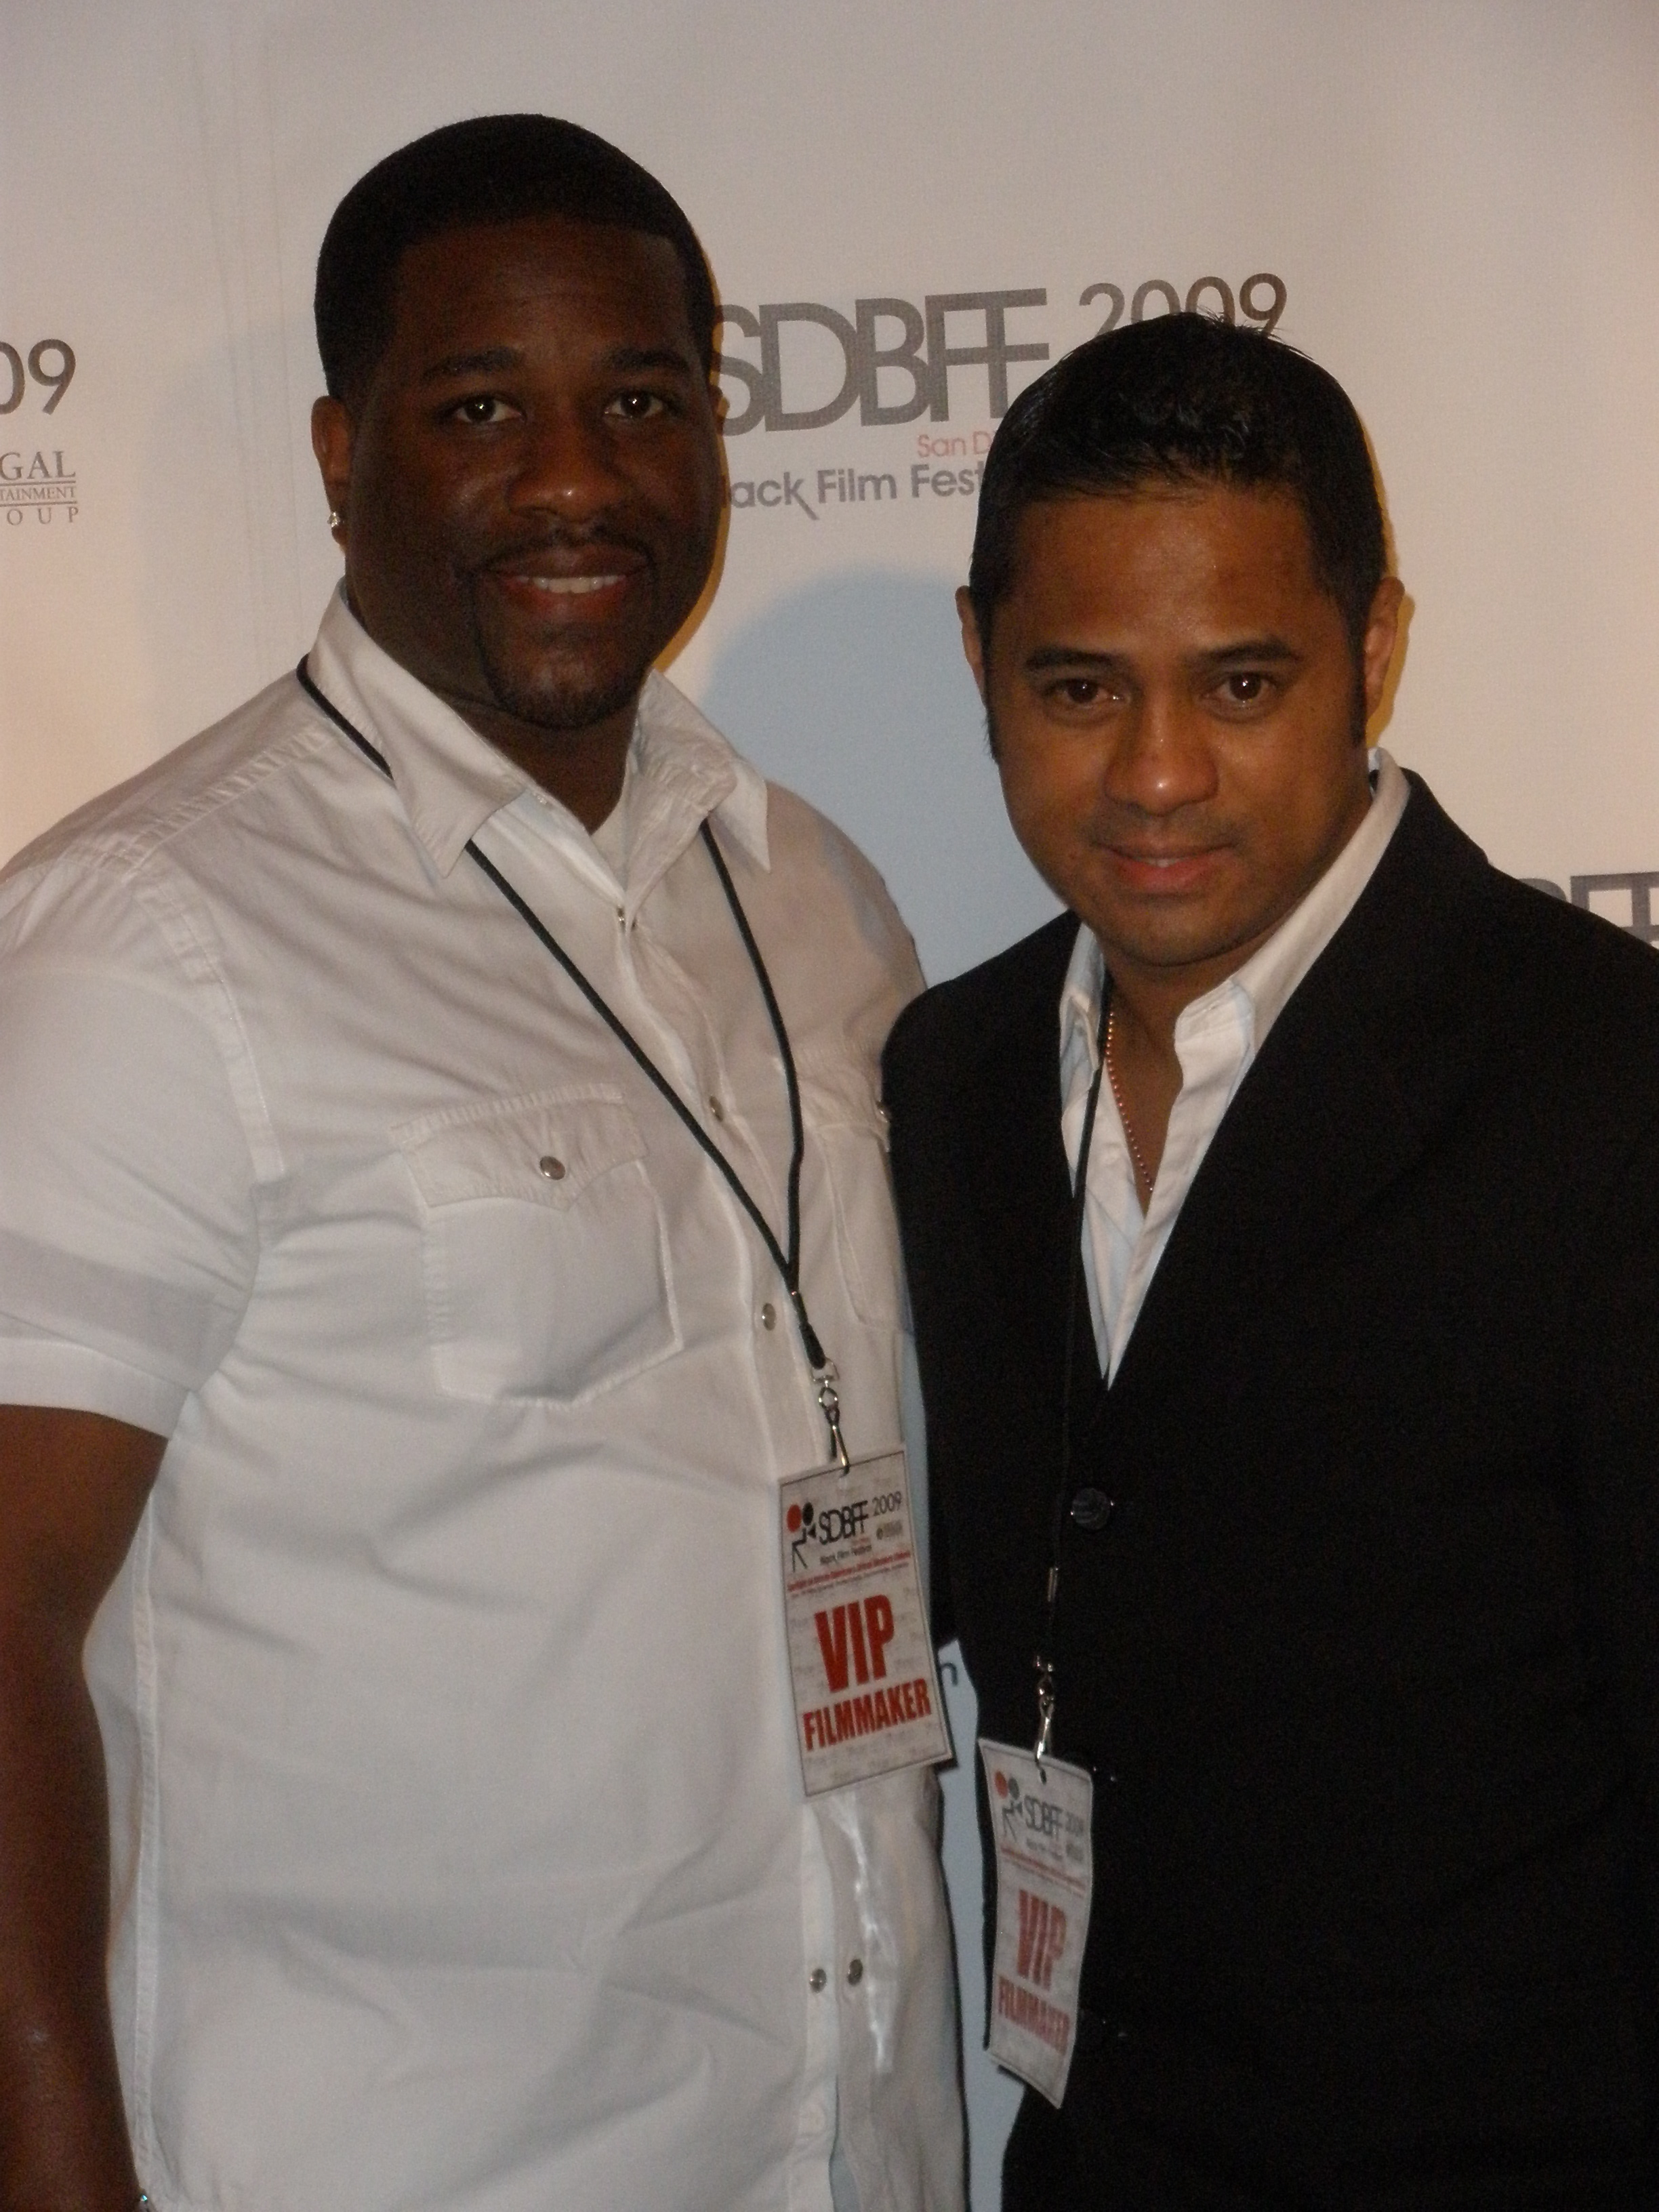 Omega Kayne and Tyrone Tann attending the San Diego Black Film Festival.